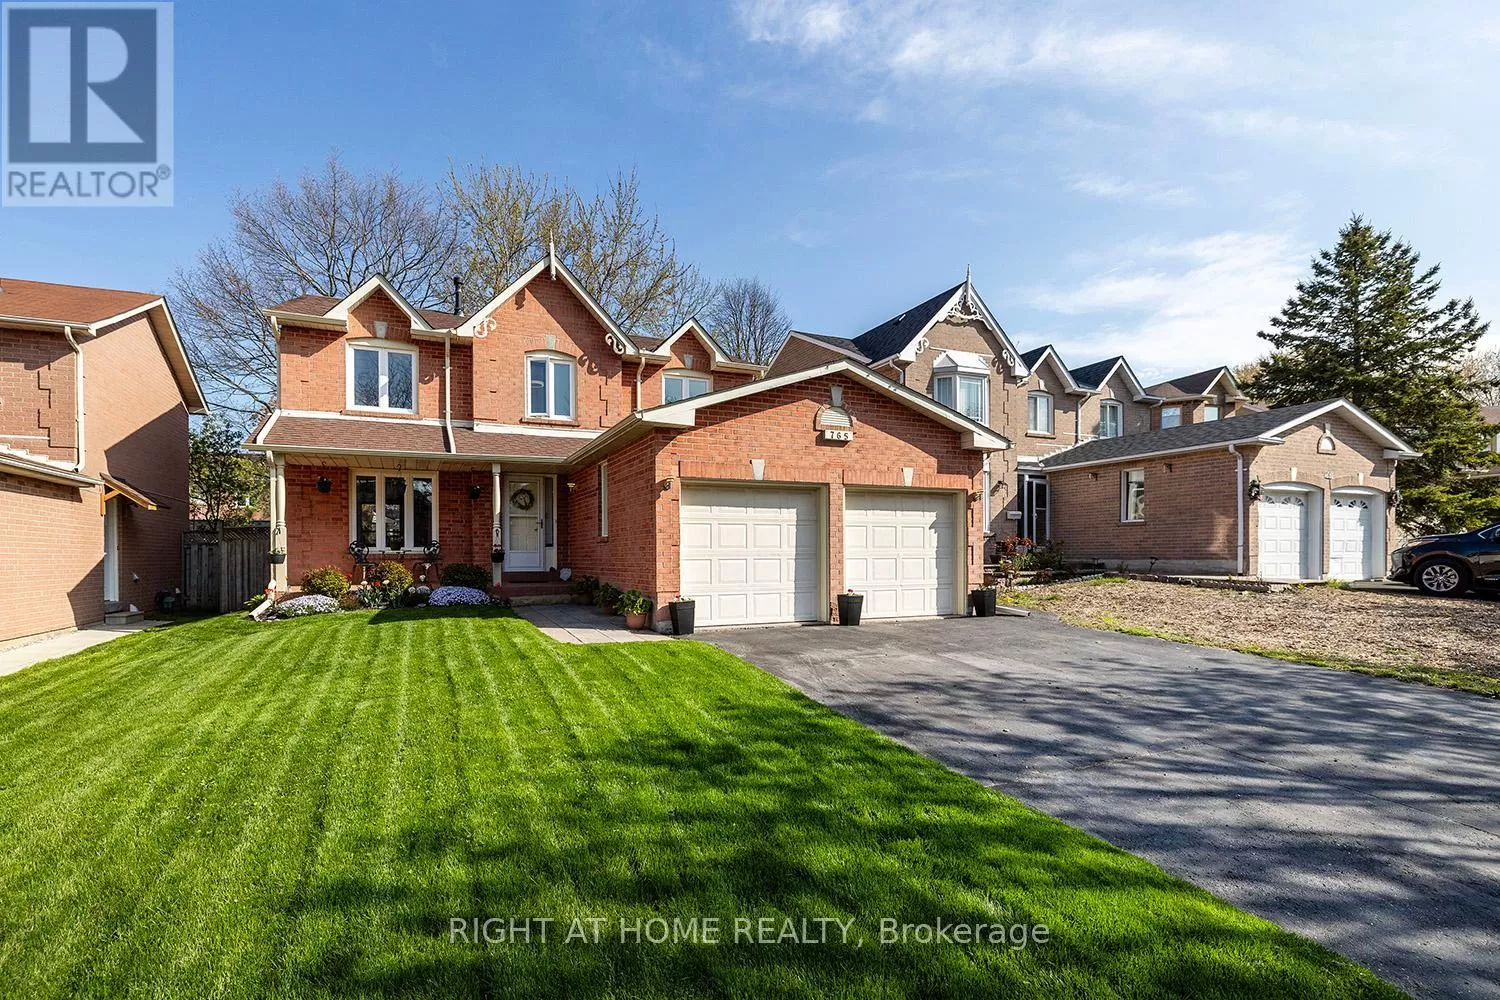 House for rent: 765 Barnes Crescent, Oshawa, Ontario L1J 8K1